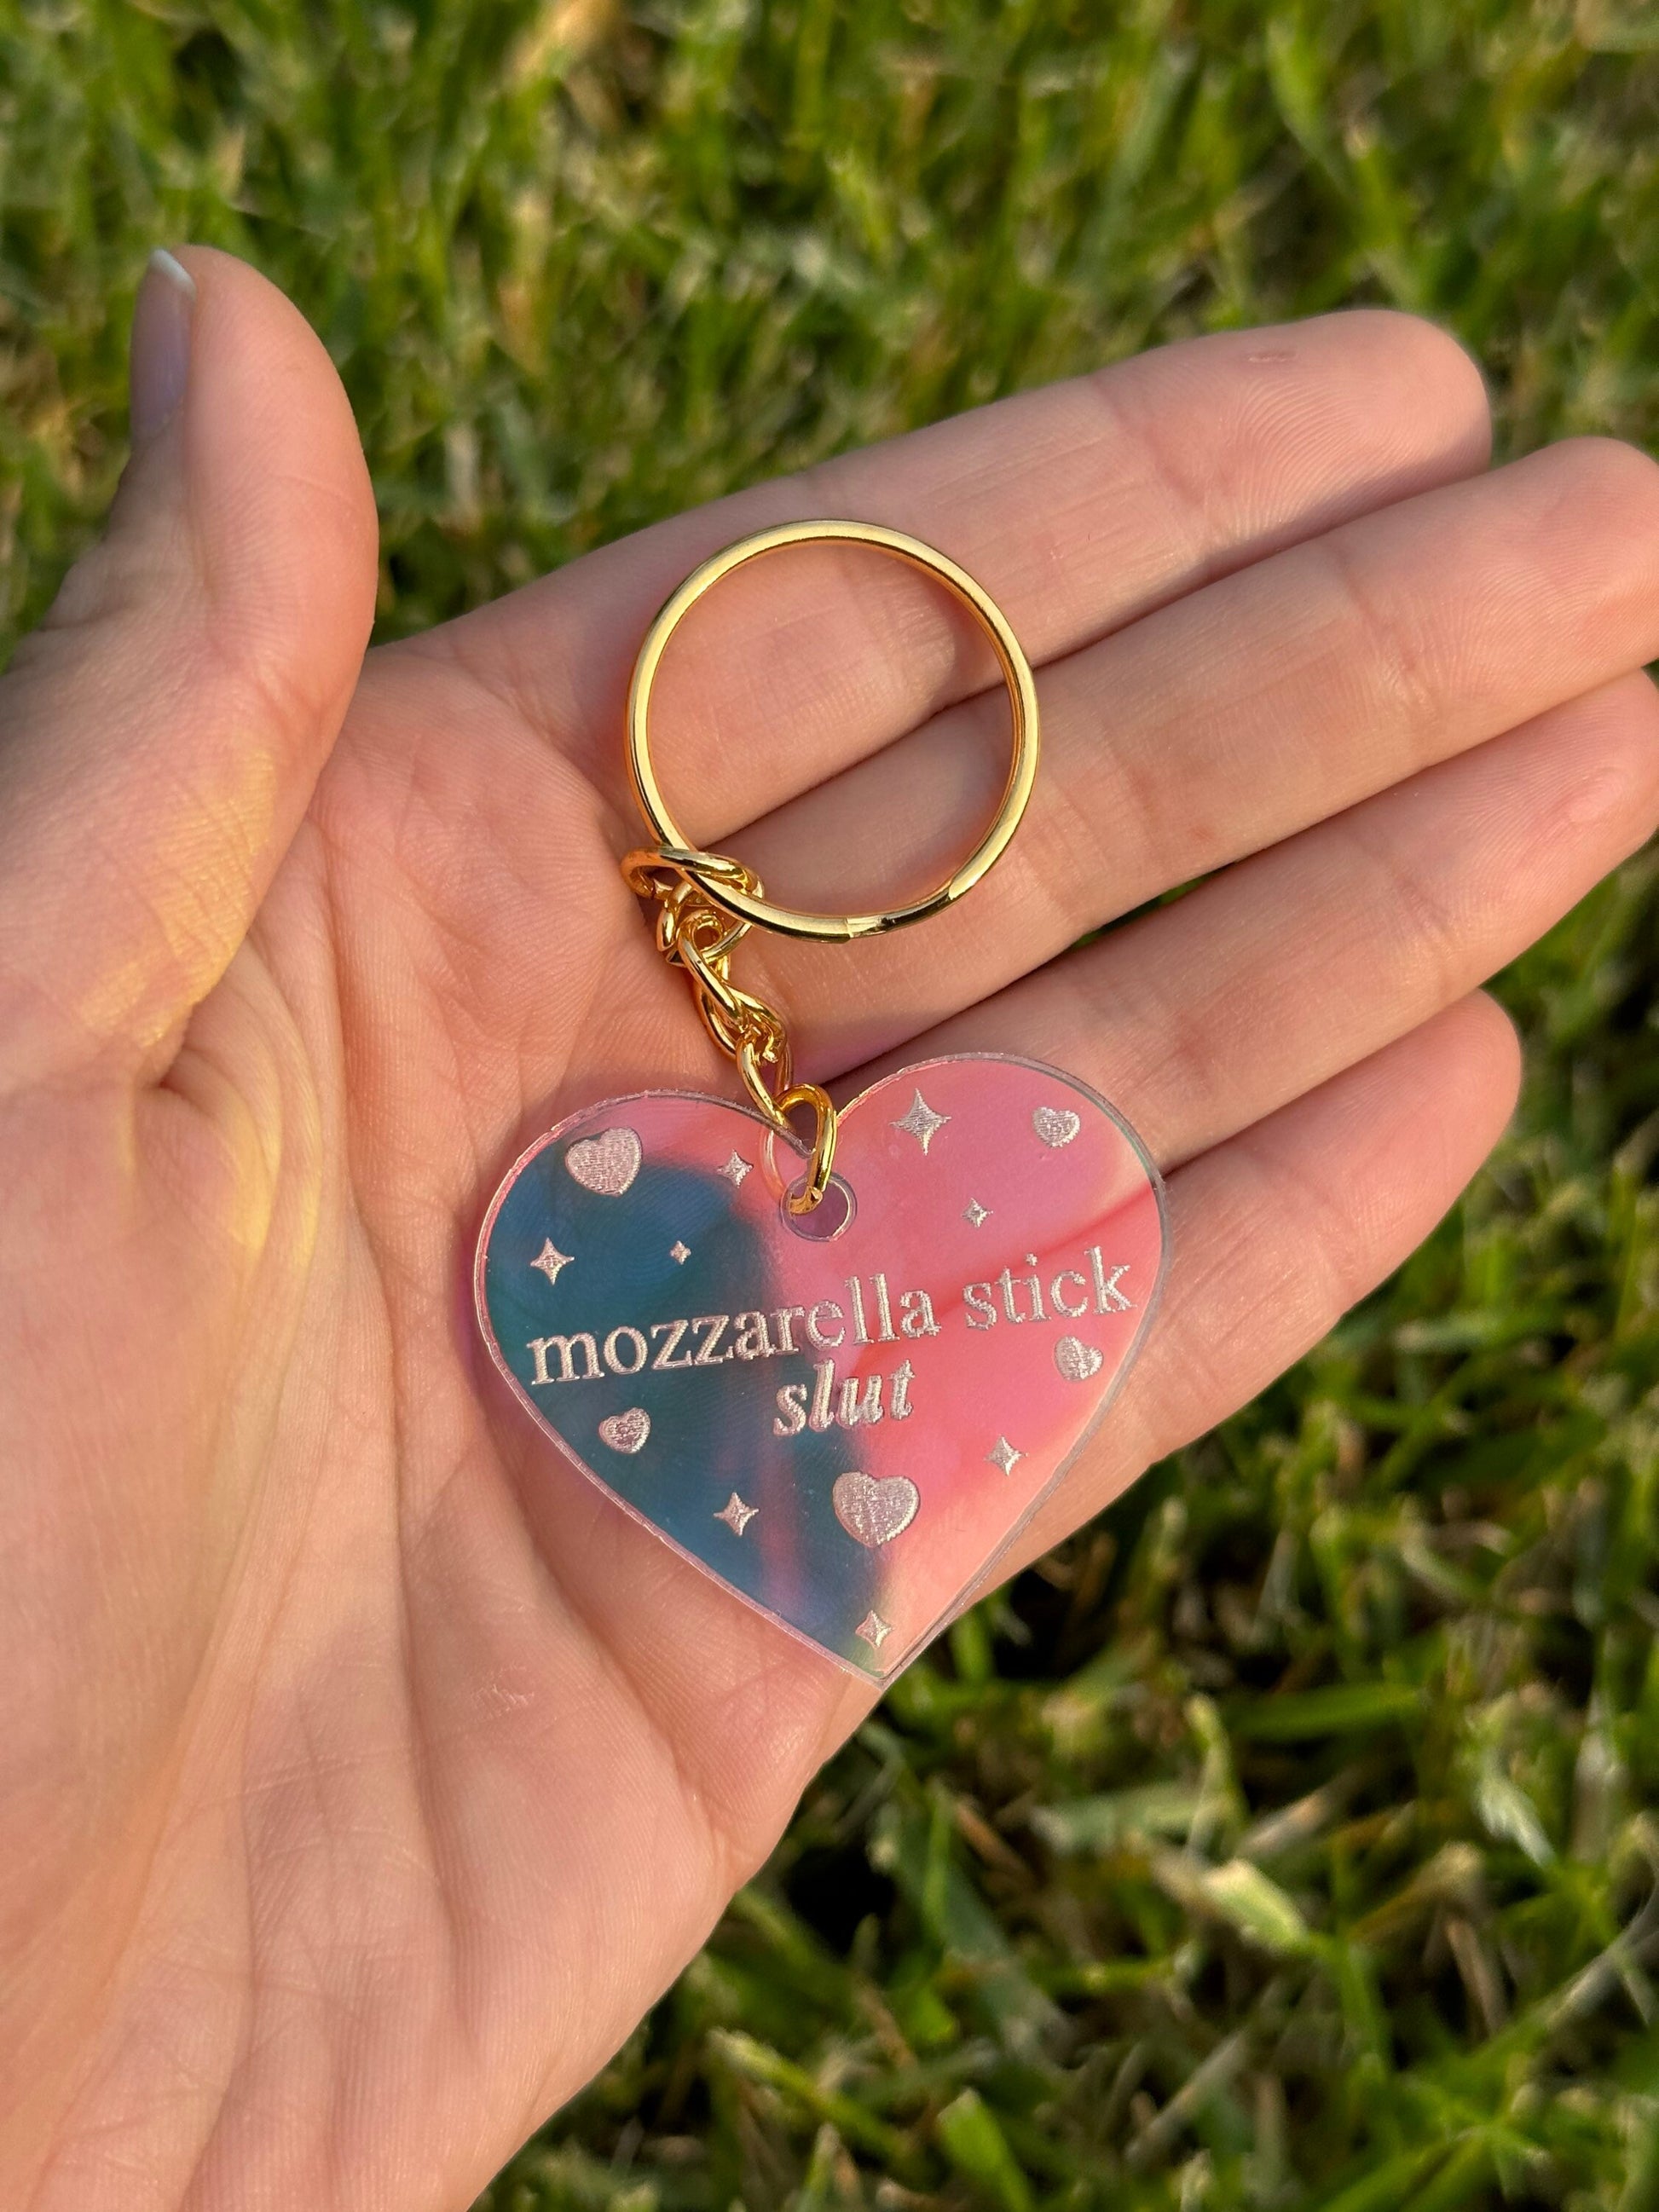 Mozzarella Stick Slut Iridescent Acrylic Keychain